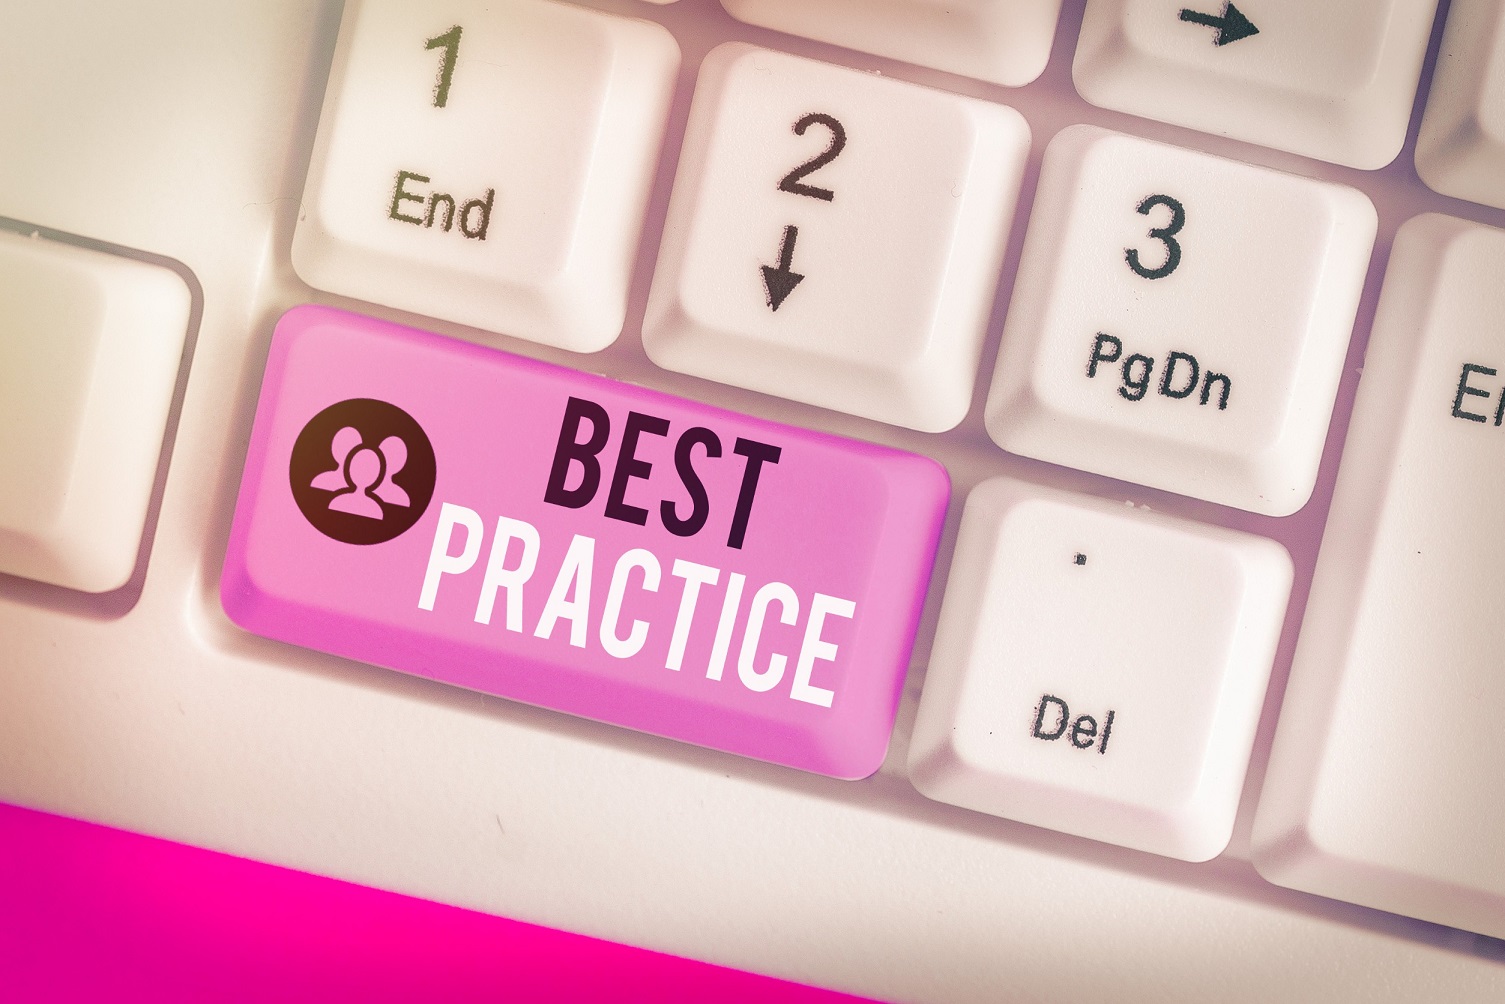 best-practices-pink-keyboard